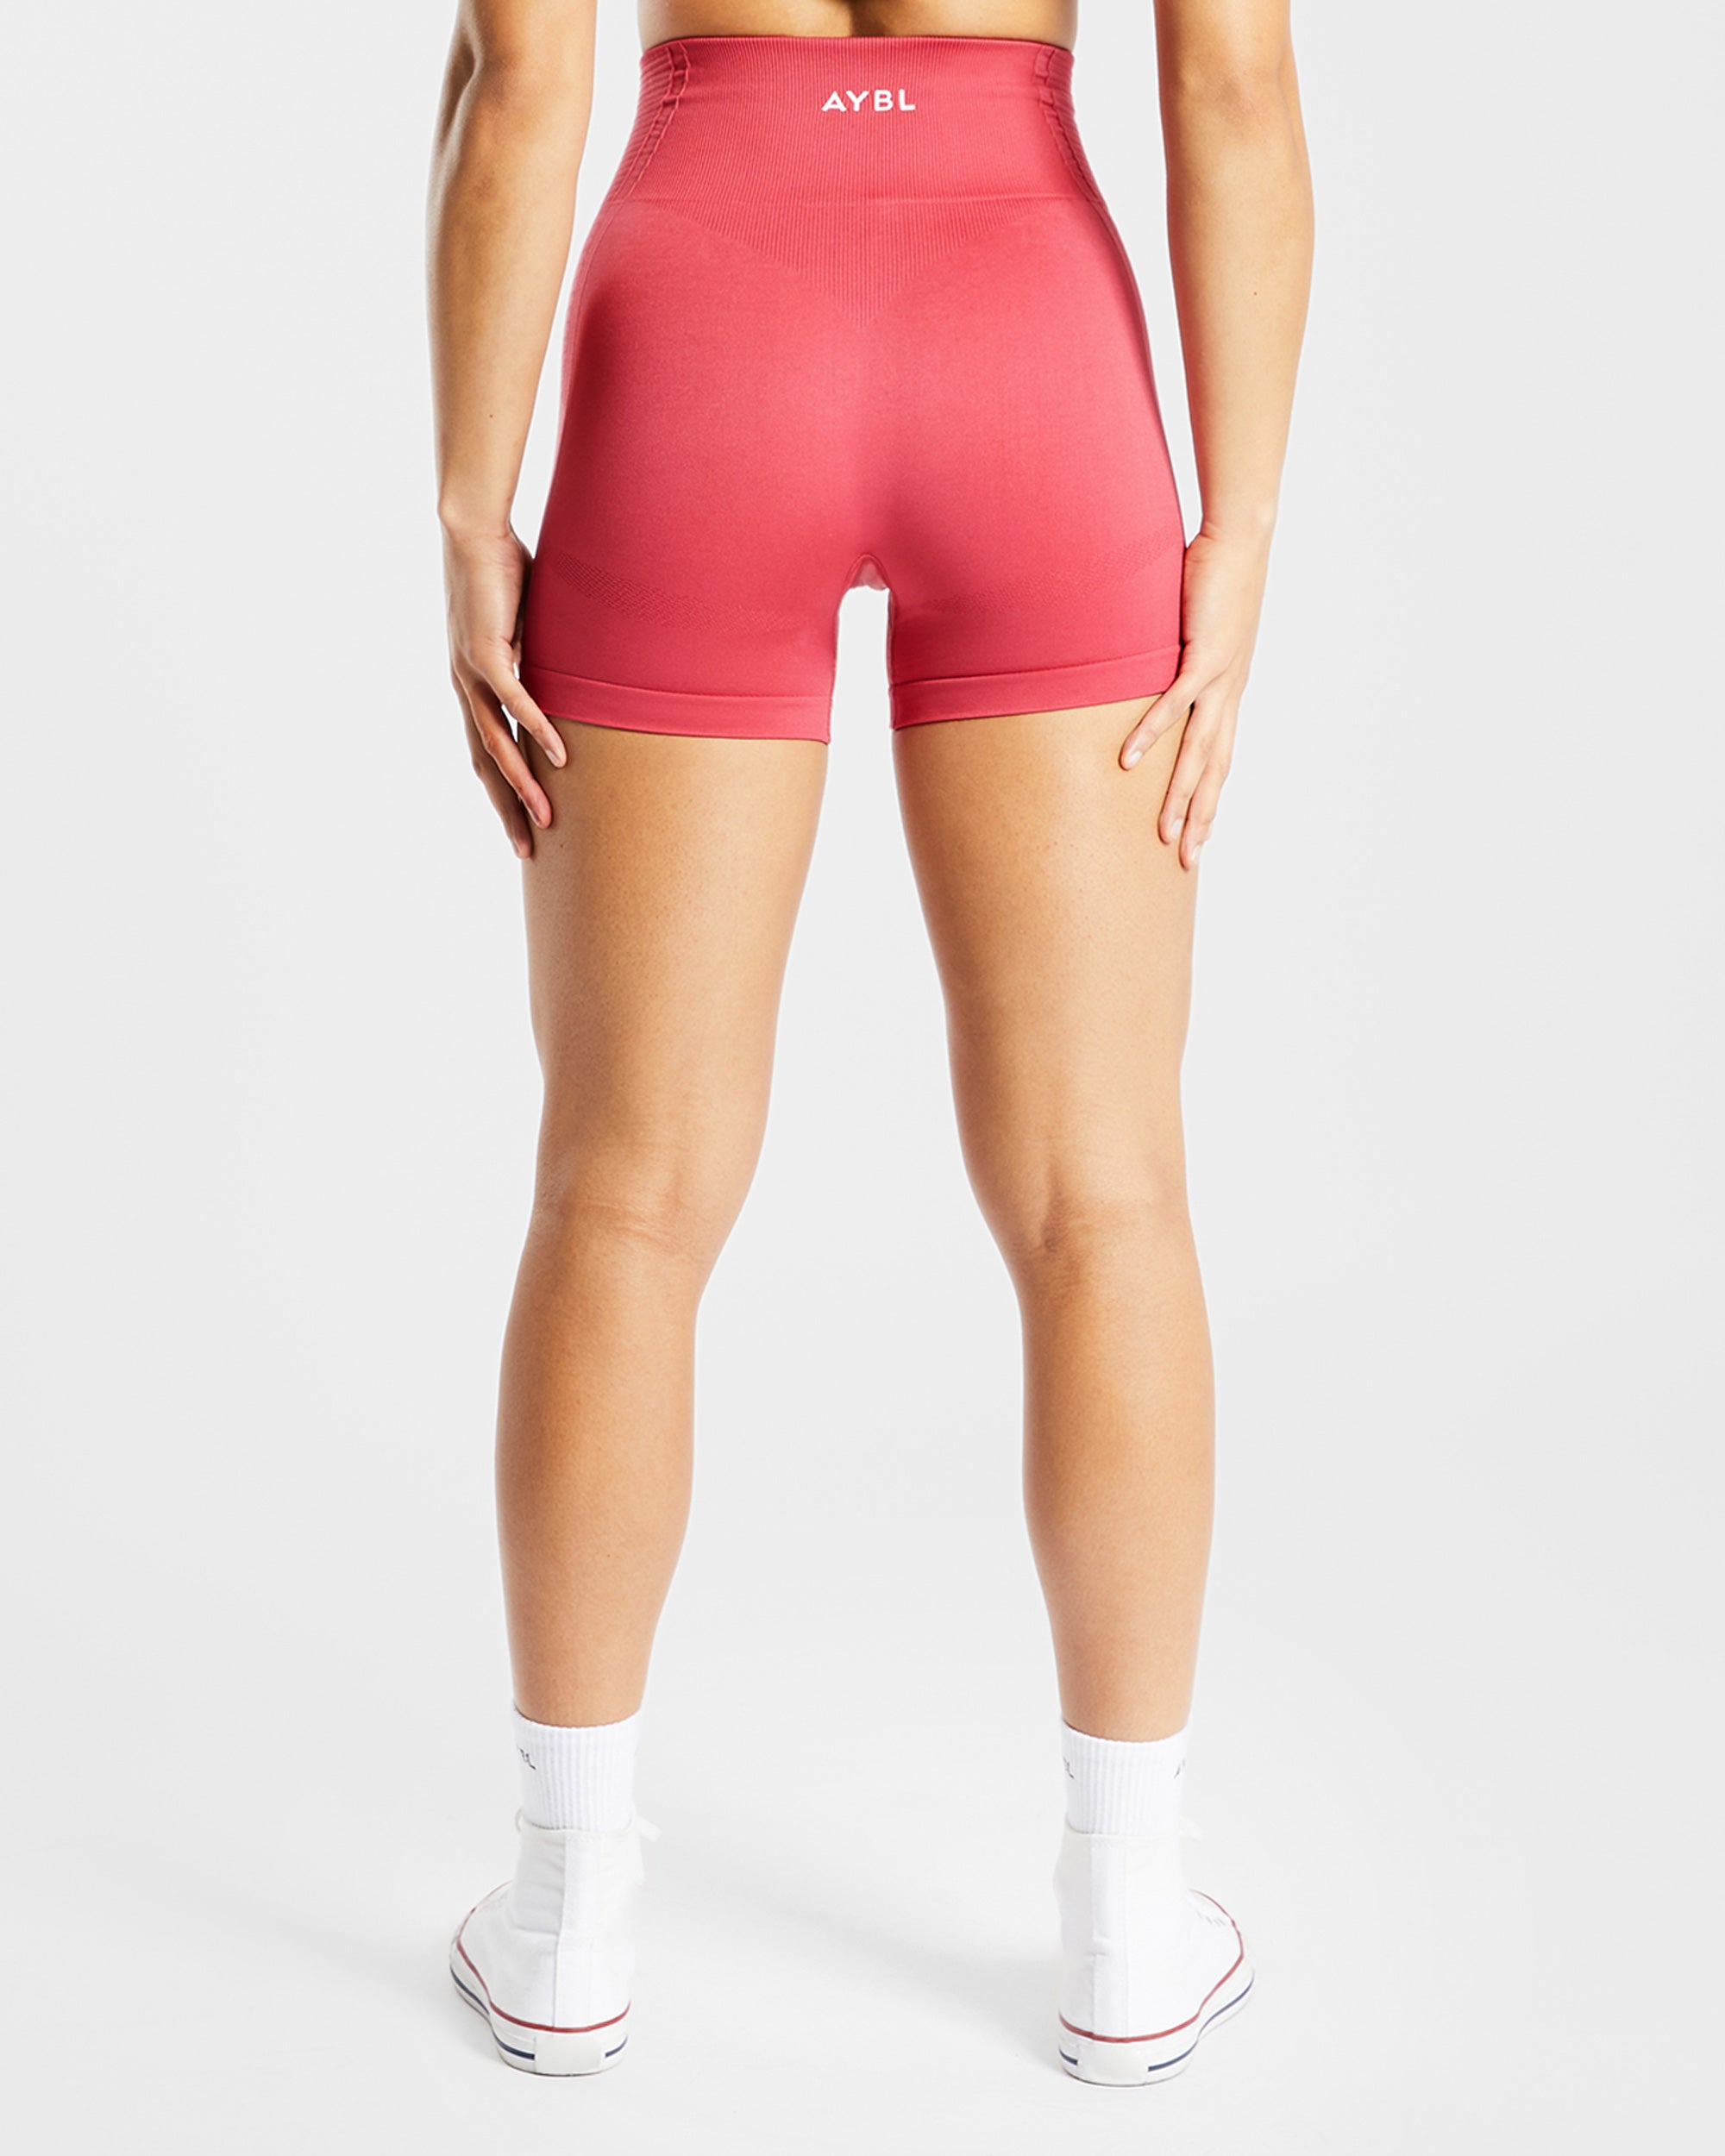 AYBL Balance V2 Seamless Shorts Blue Size XL - $23 (34% Off Retail) - From  Wendy